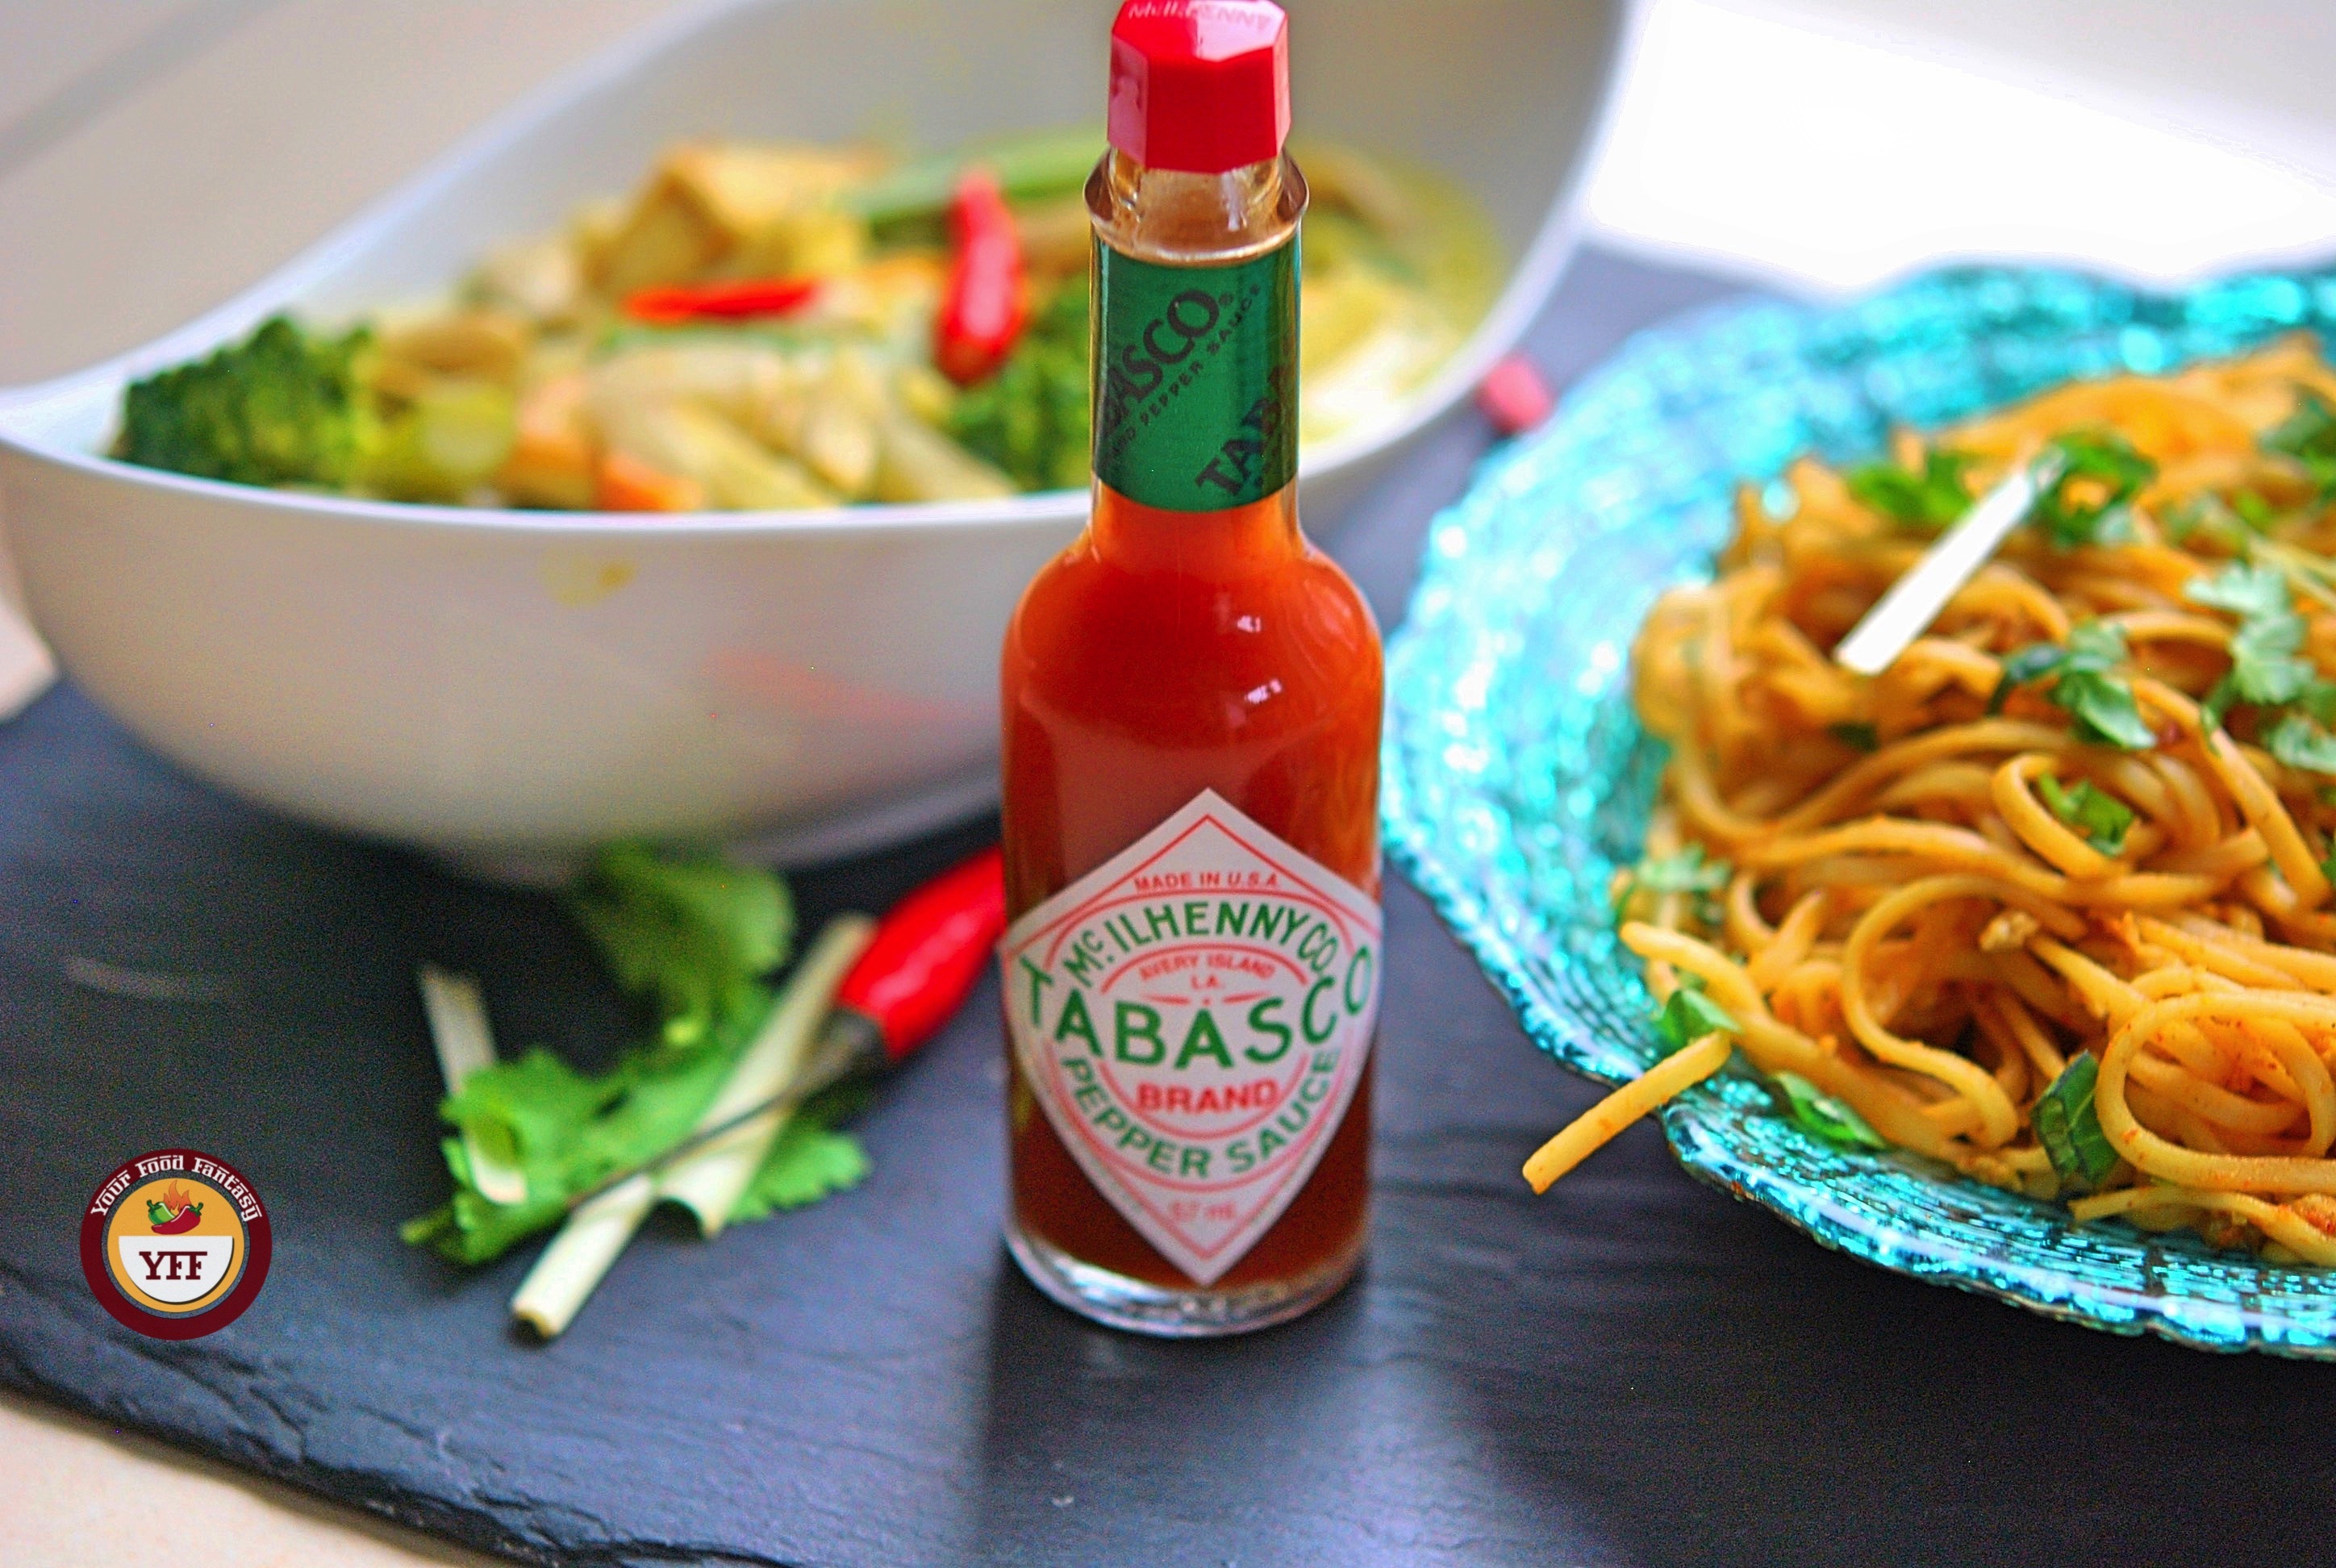 Tabasco Sauce review | Degustabox November 2018 Review | Your Food Fantasy